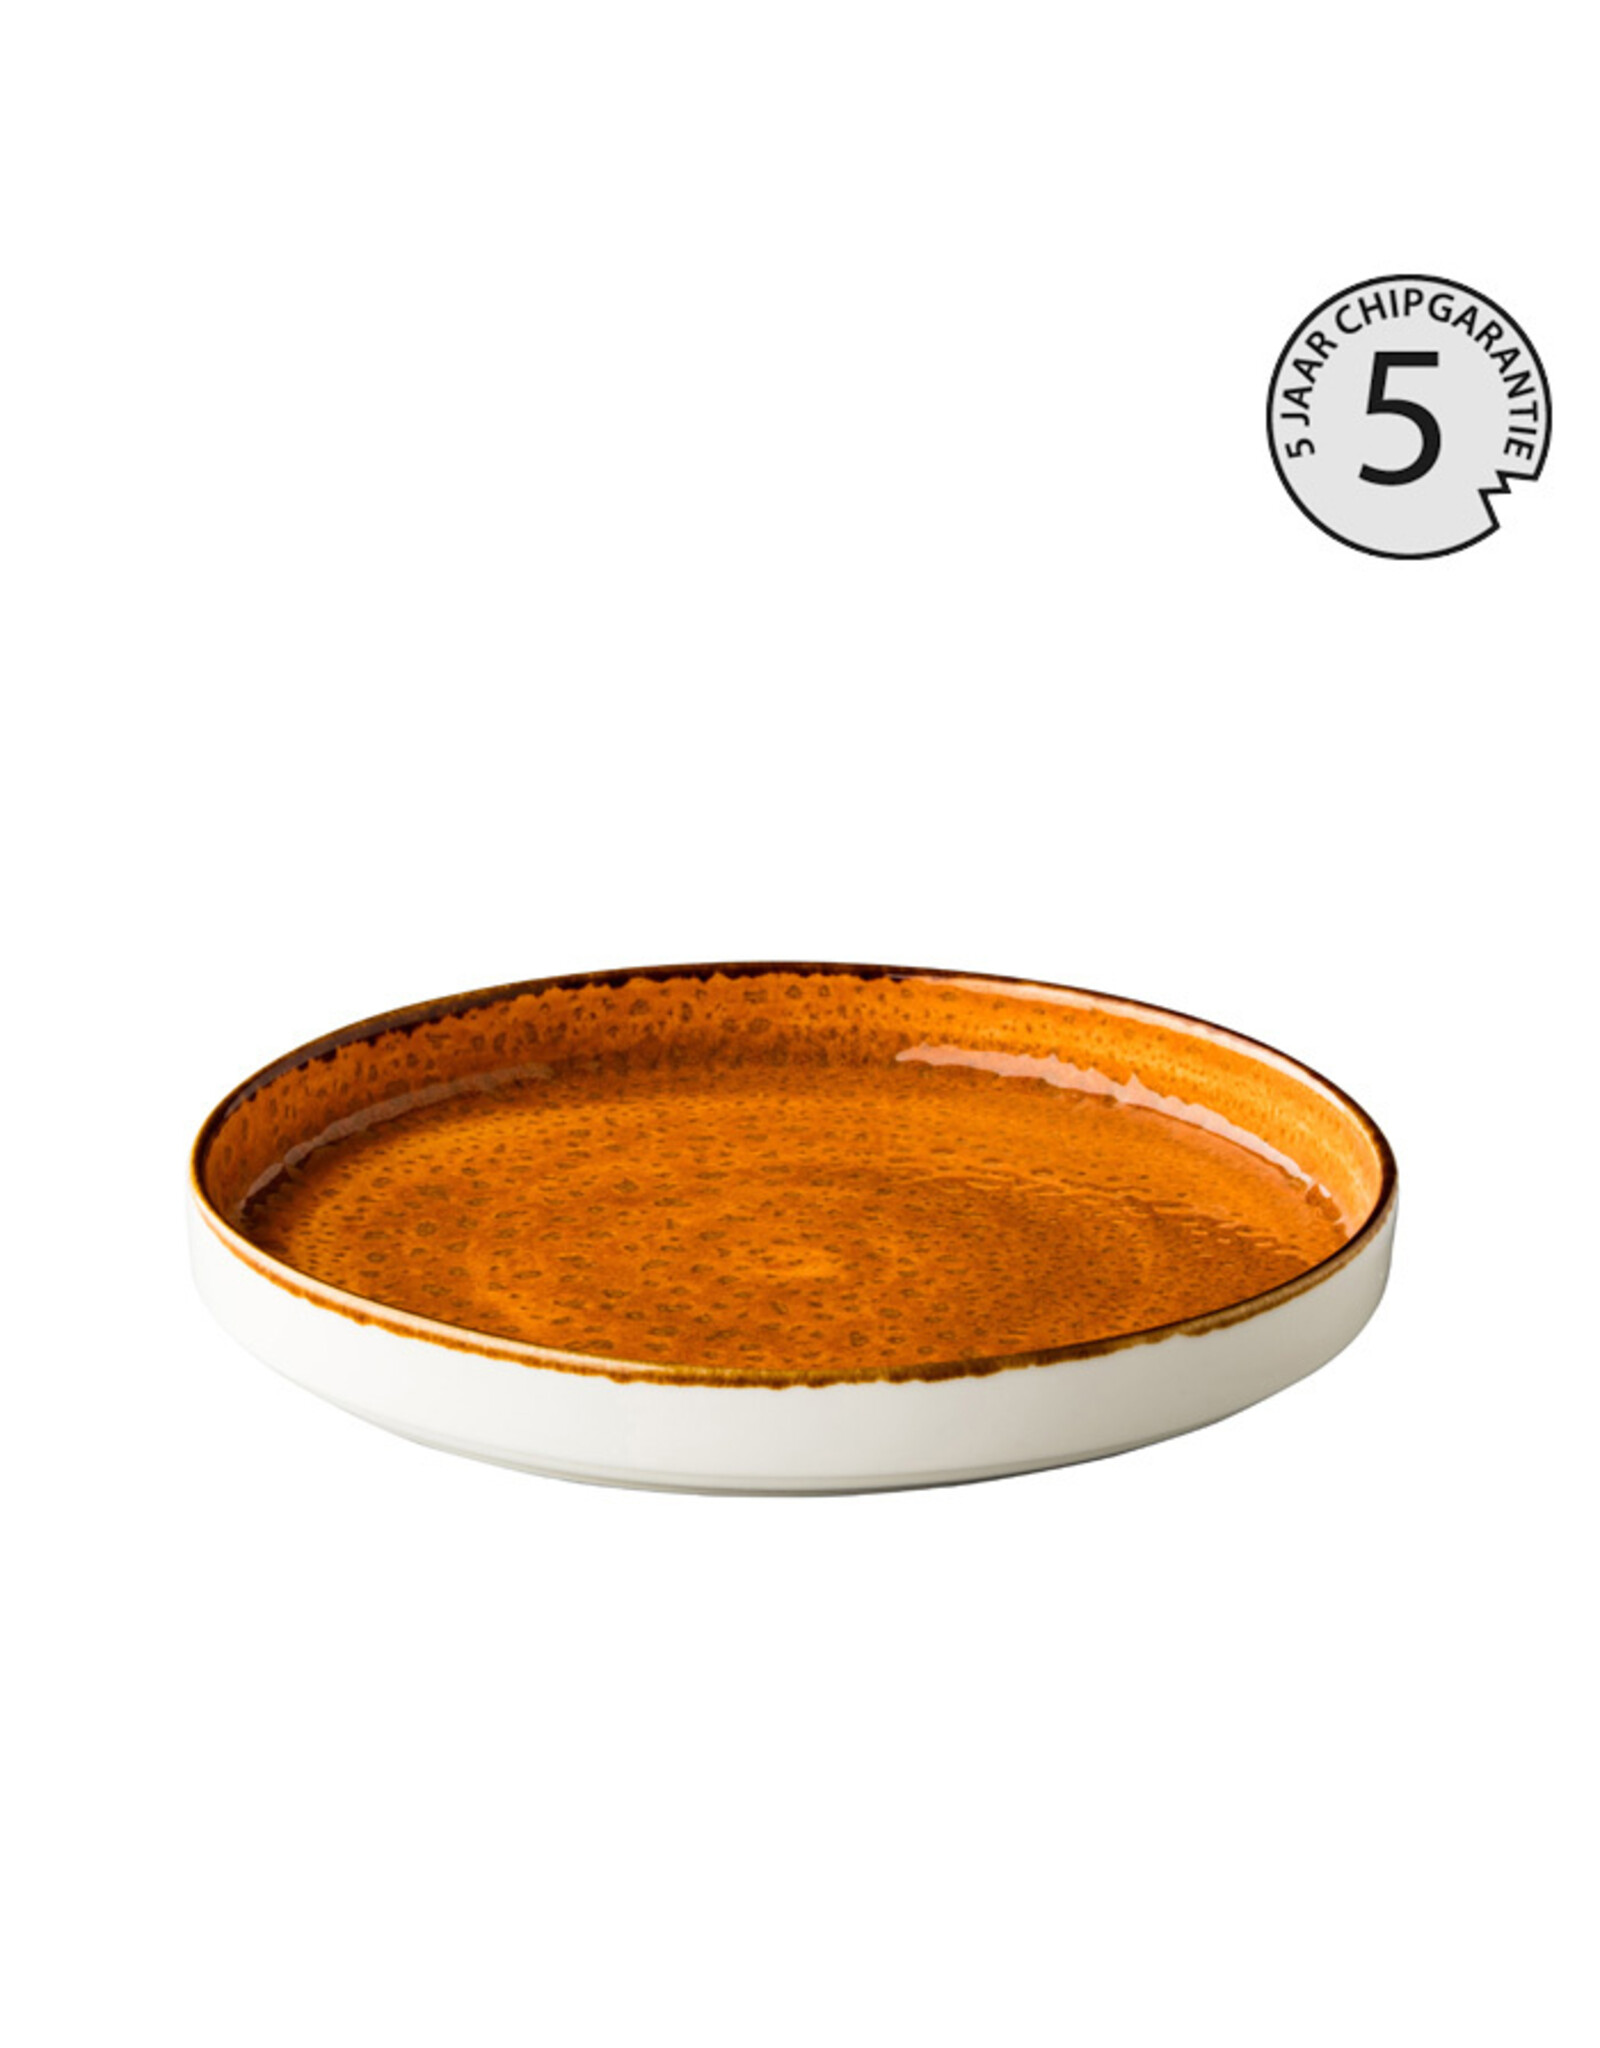 Stylepoint Jersey round plate raised edge orange 20,4 cm stackable - 5 year chip warranty